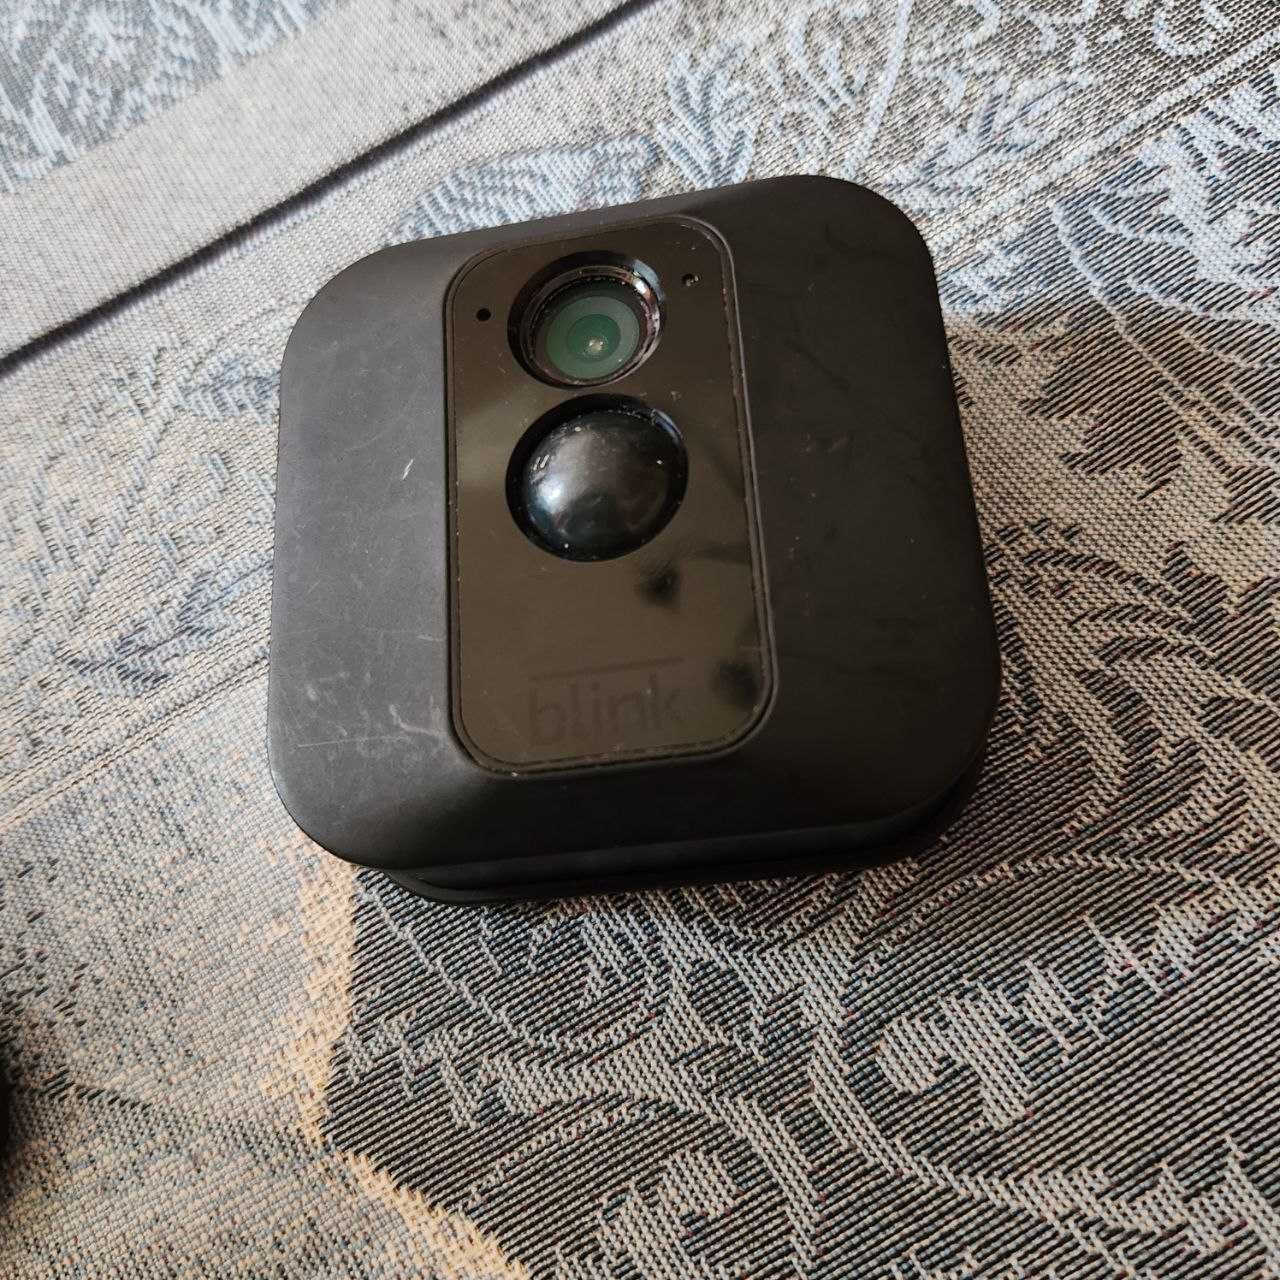 Охранная камера умного дома Blink XT Video Security Camera